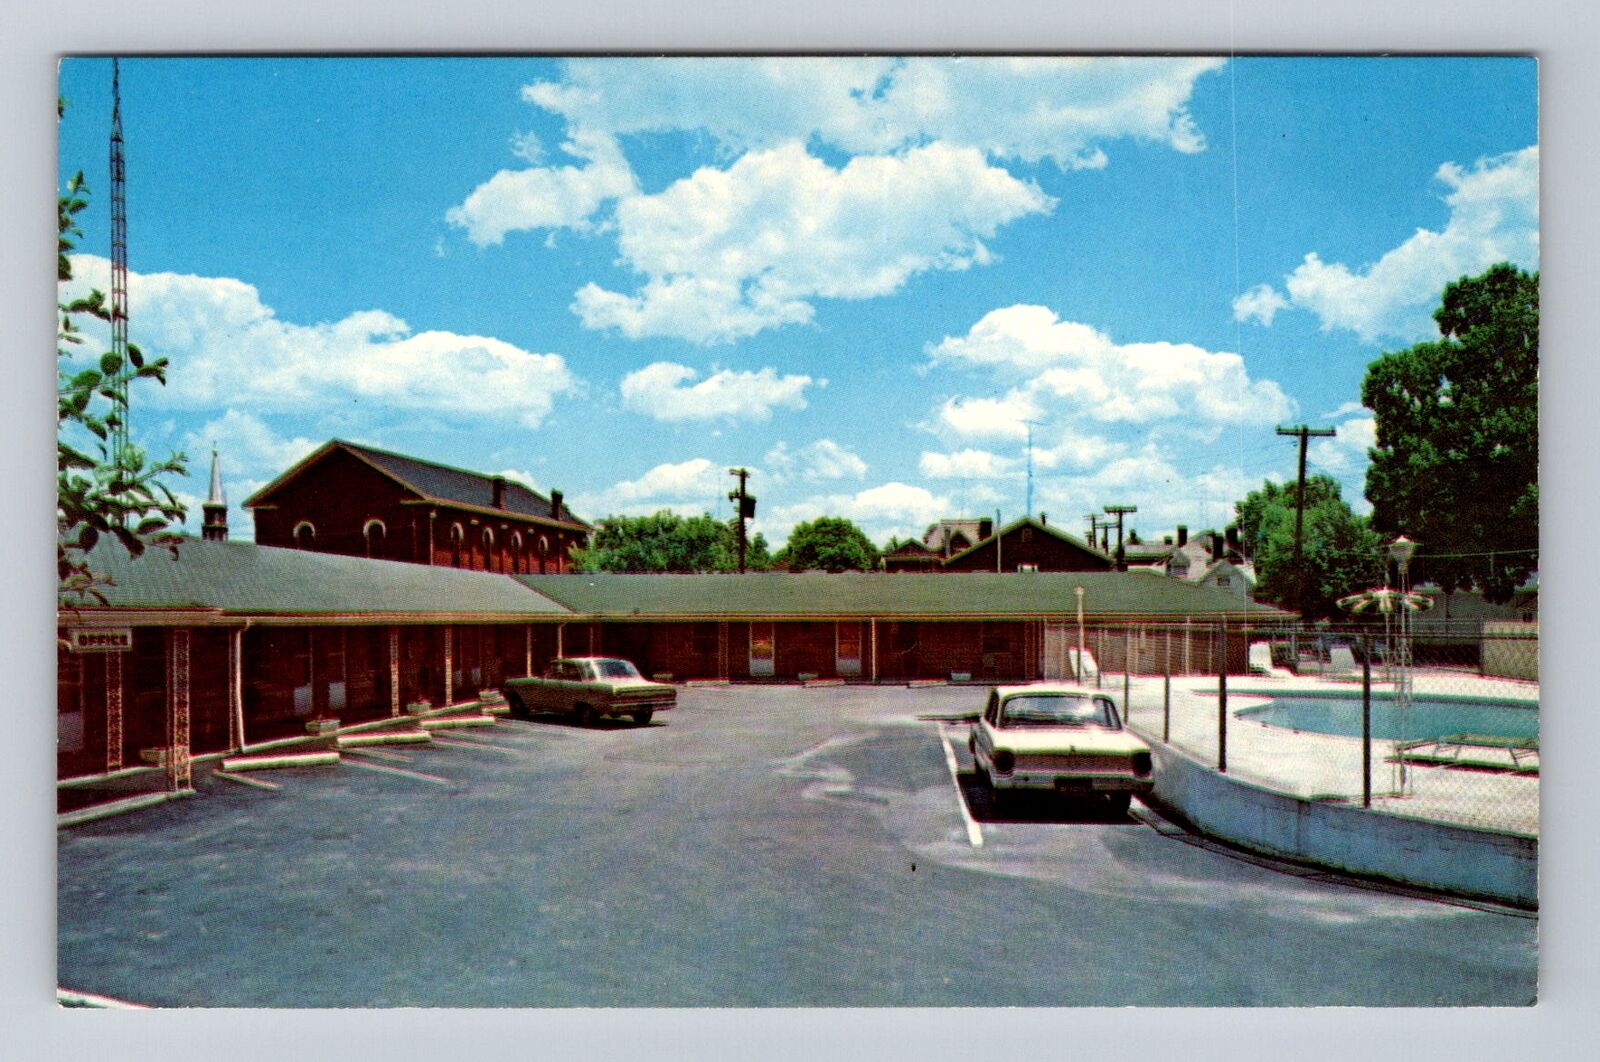 Paris KY-Kentucky, Craycraft Motel Advertising, Vintage Souvenir Postcard